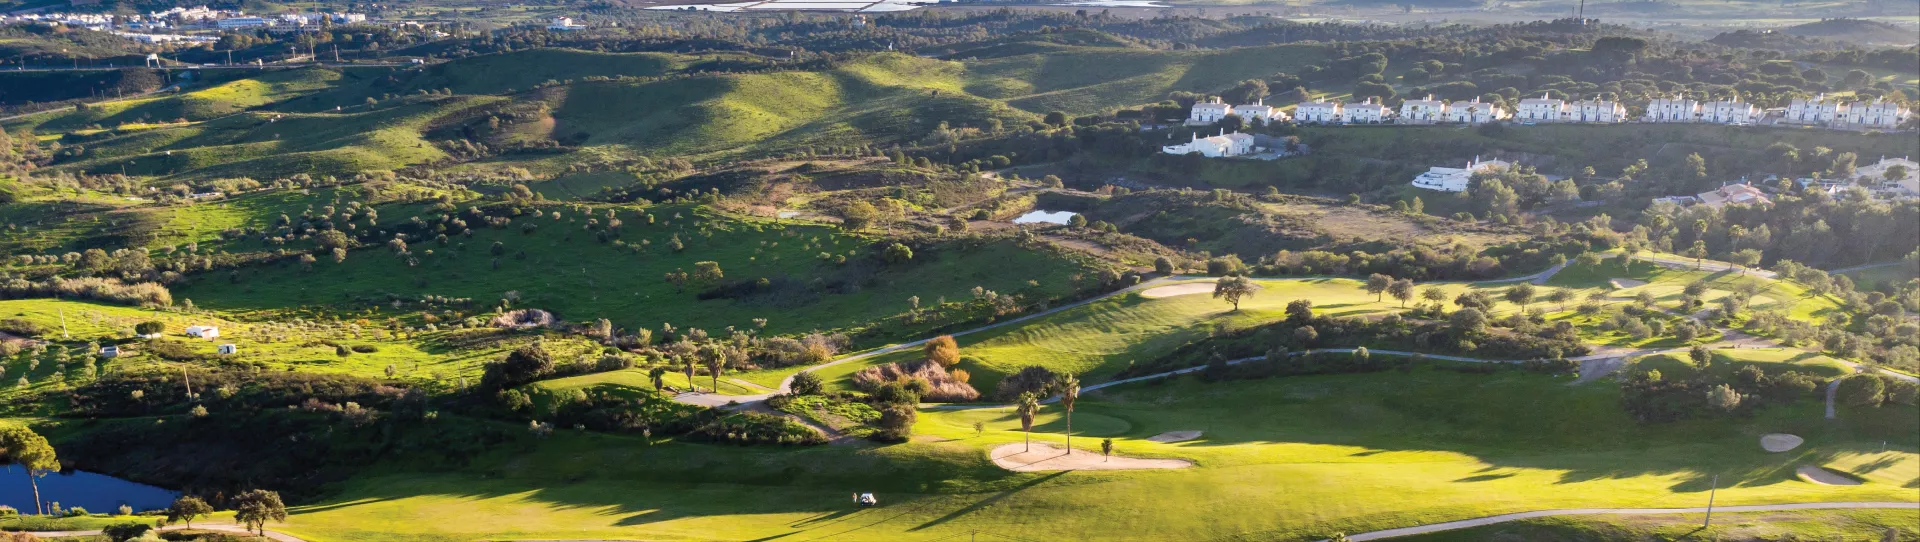 Portugal golf courses - Castro Marim Golf Course - Photo 2